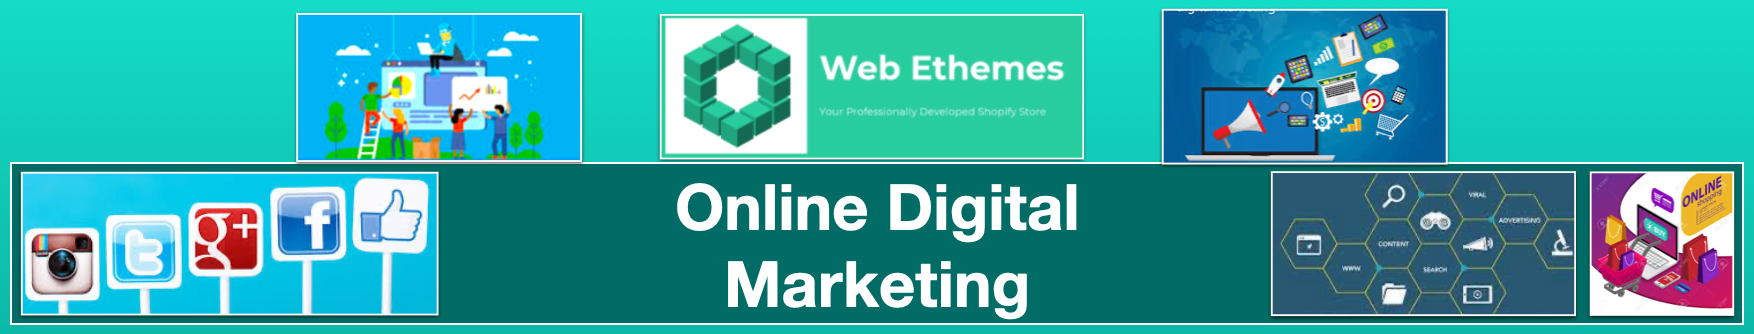 Web-ethemes Online Digital Marketing